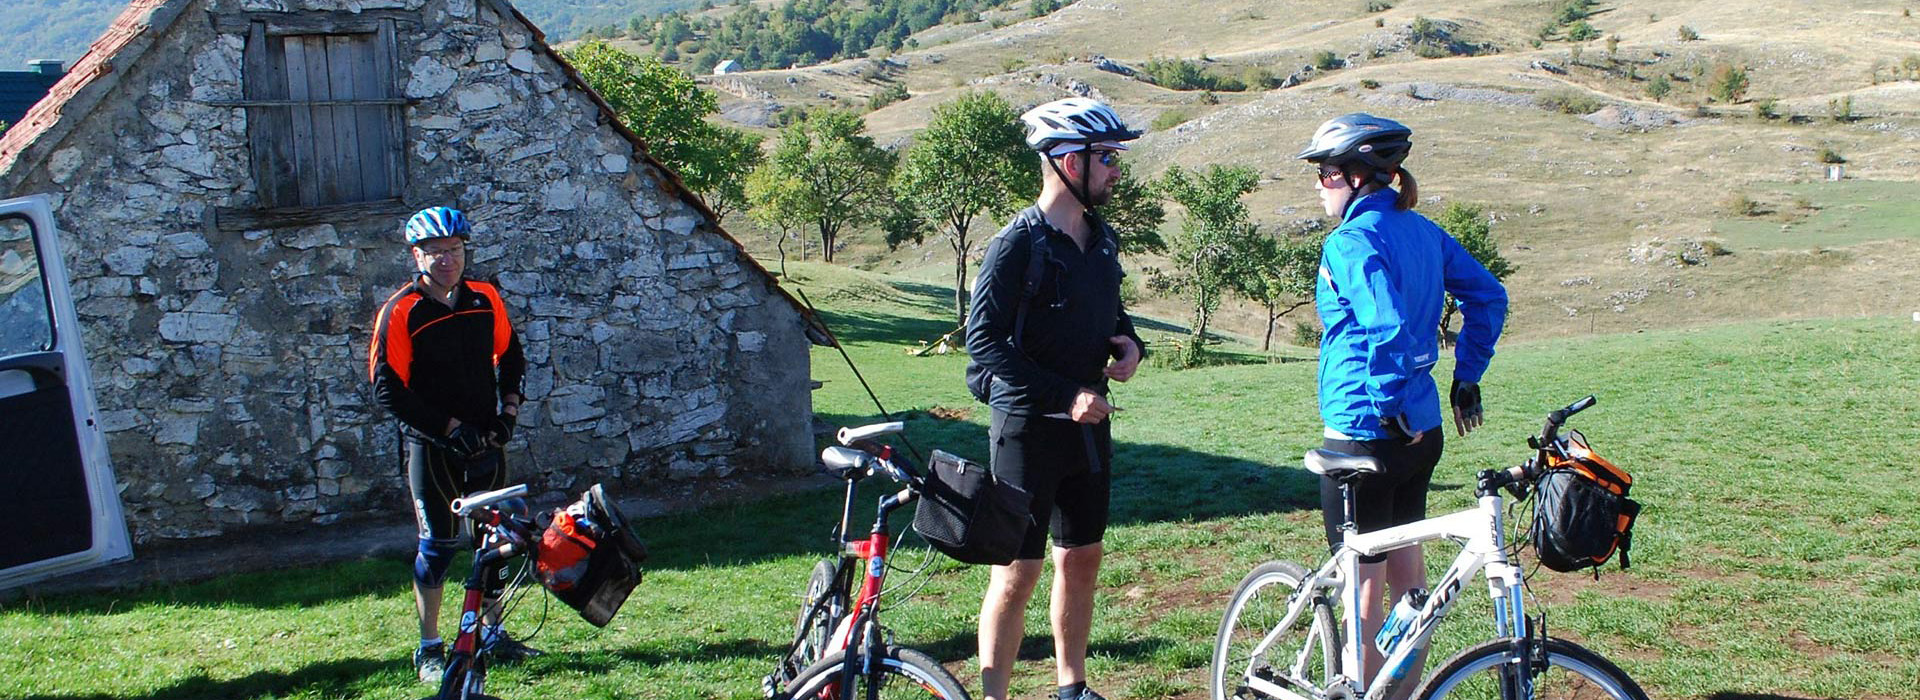 Cycling Balkans guided holiday - Etno village Izlazak